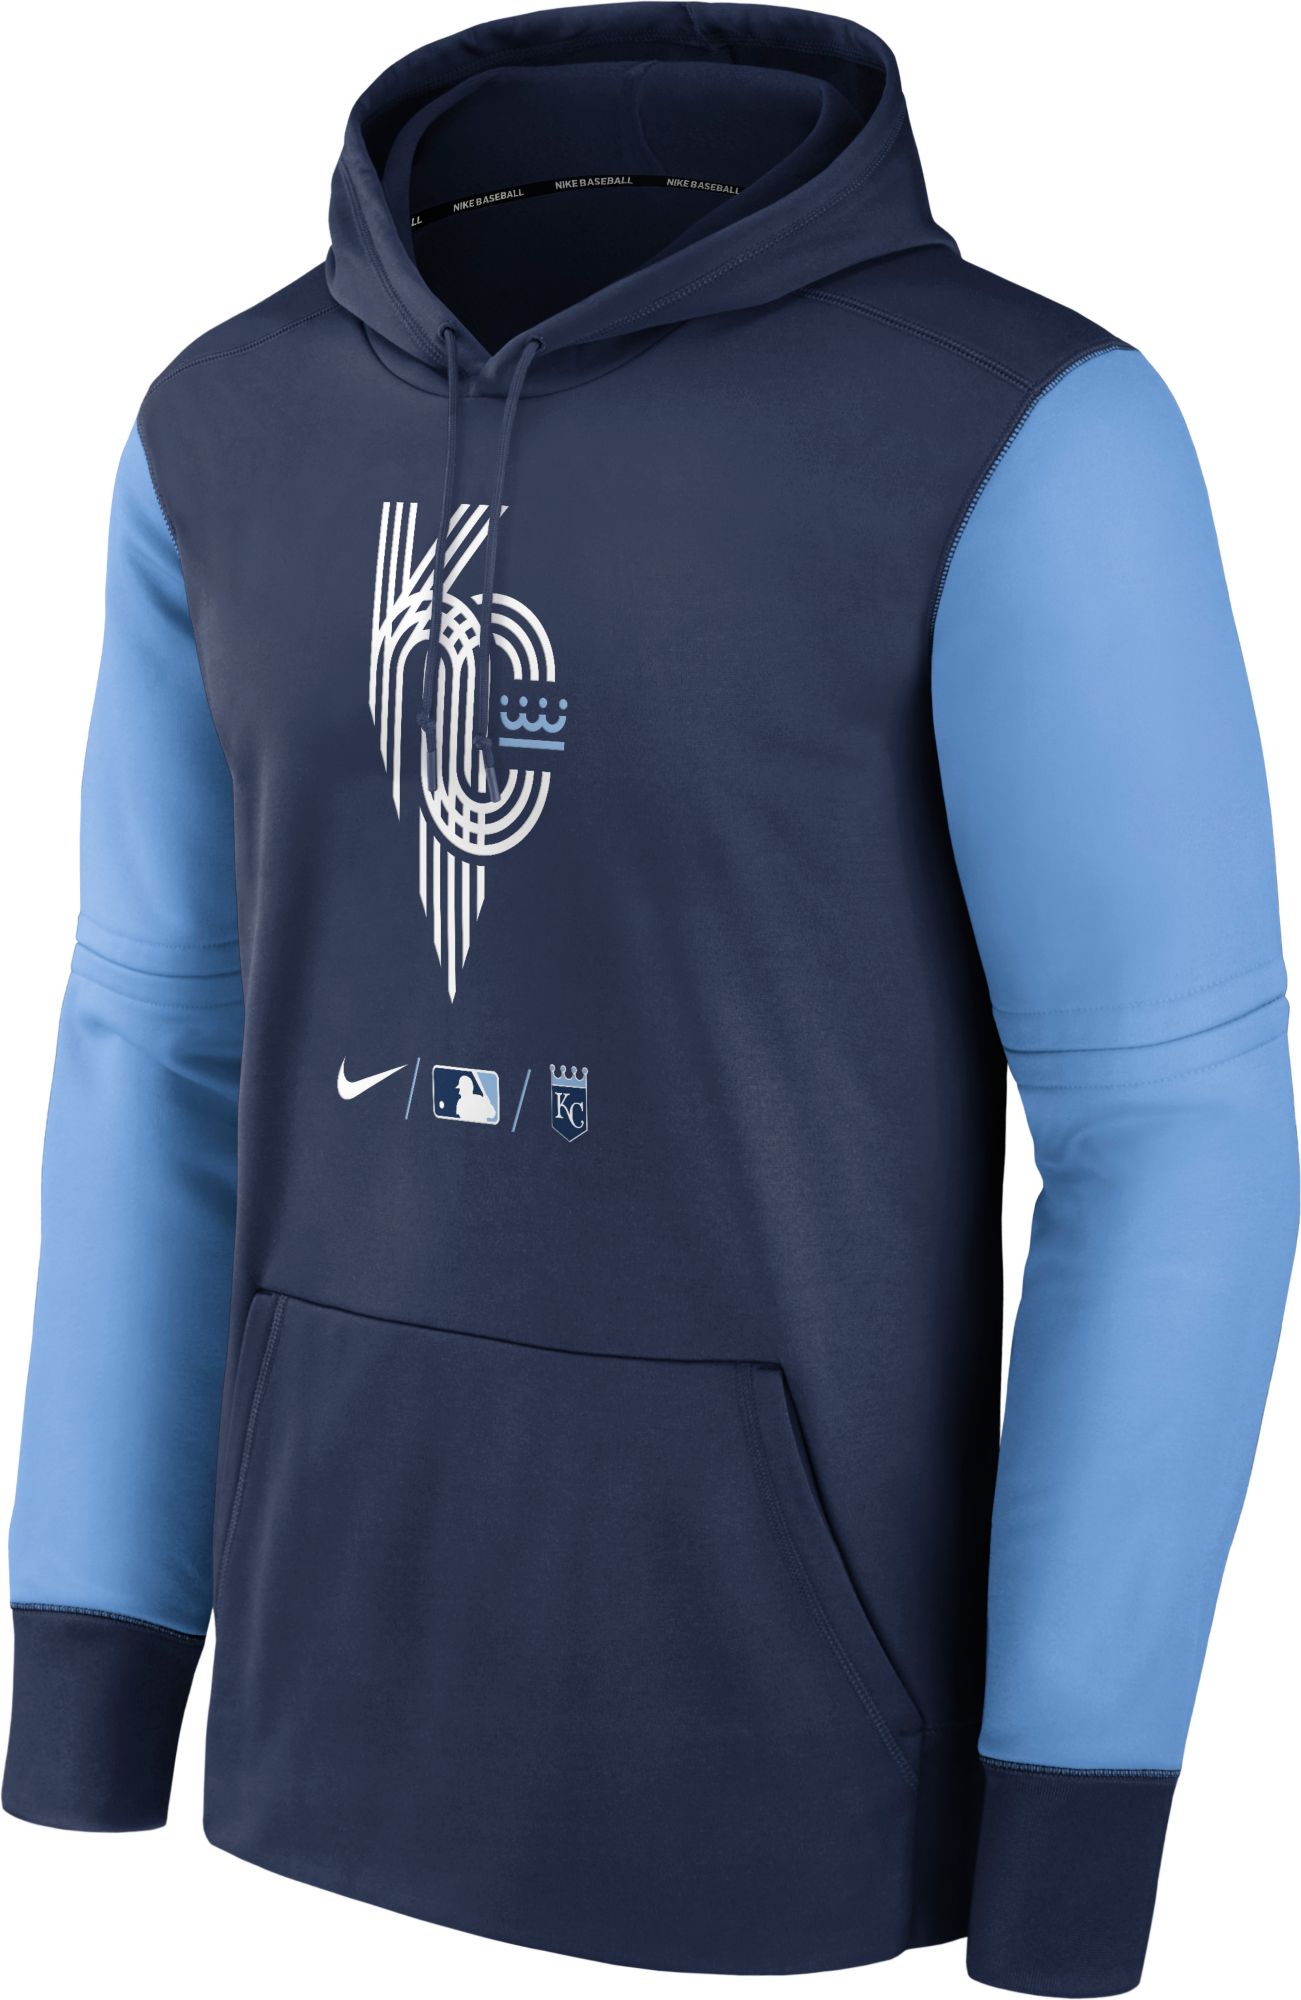 Kansas City Royals Shirt Womens Blue Nike Dri Fit V Neck Short